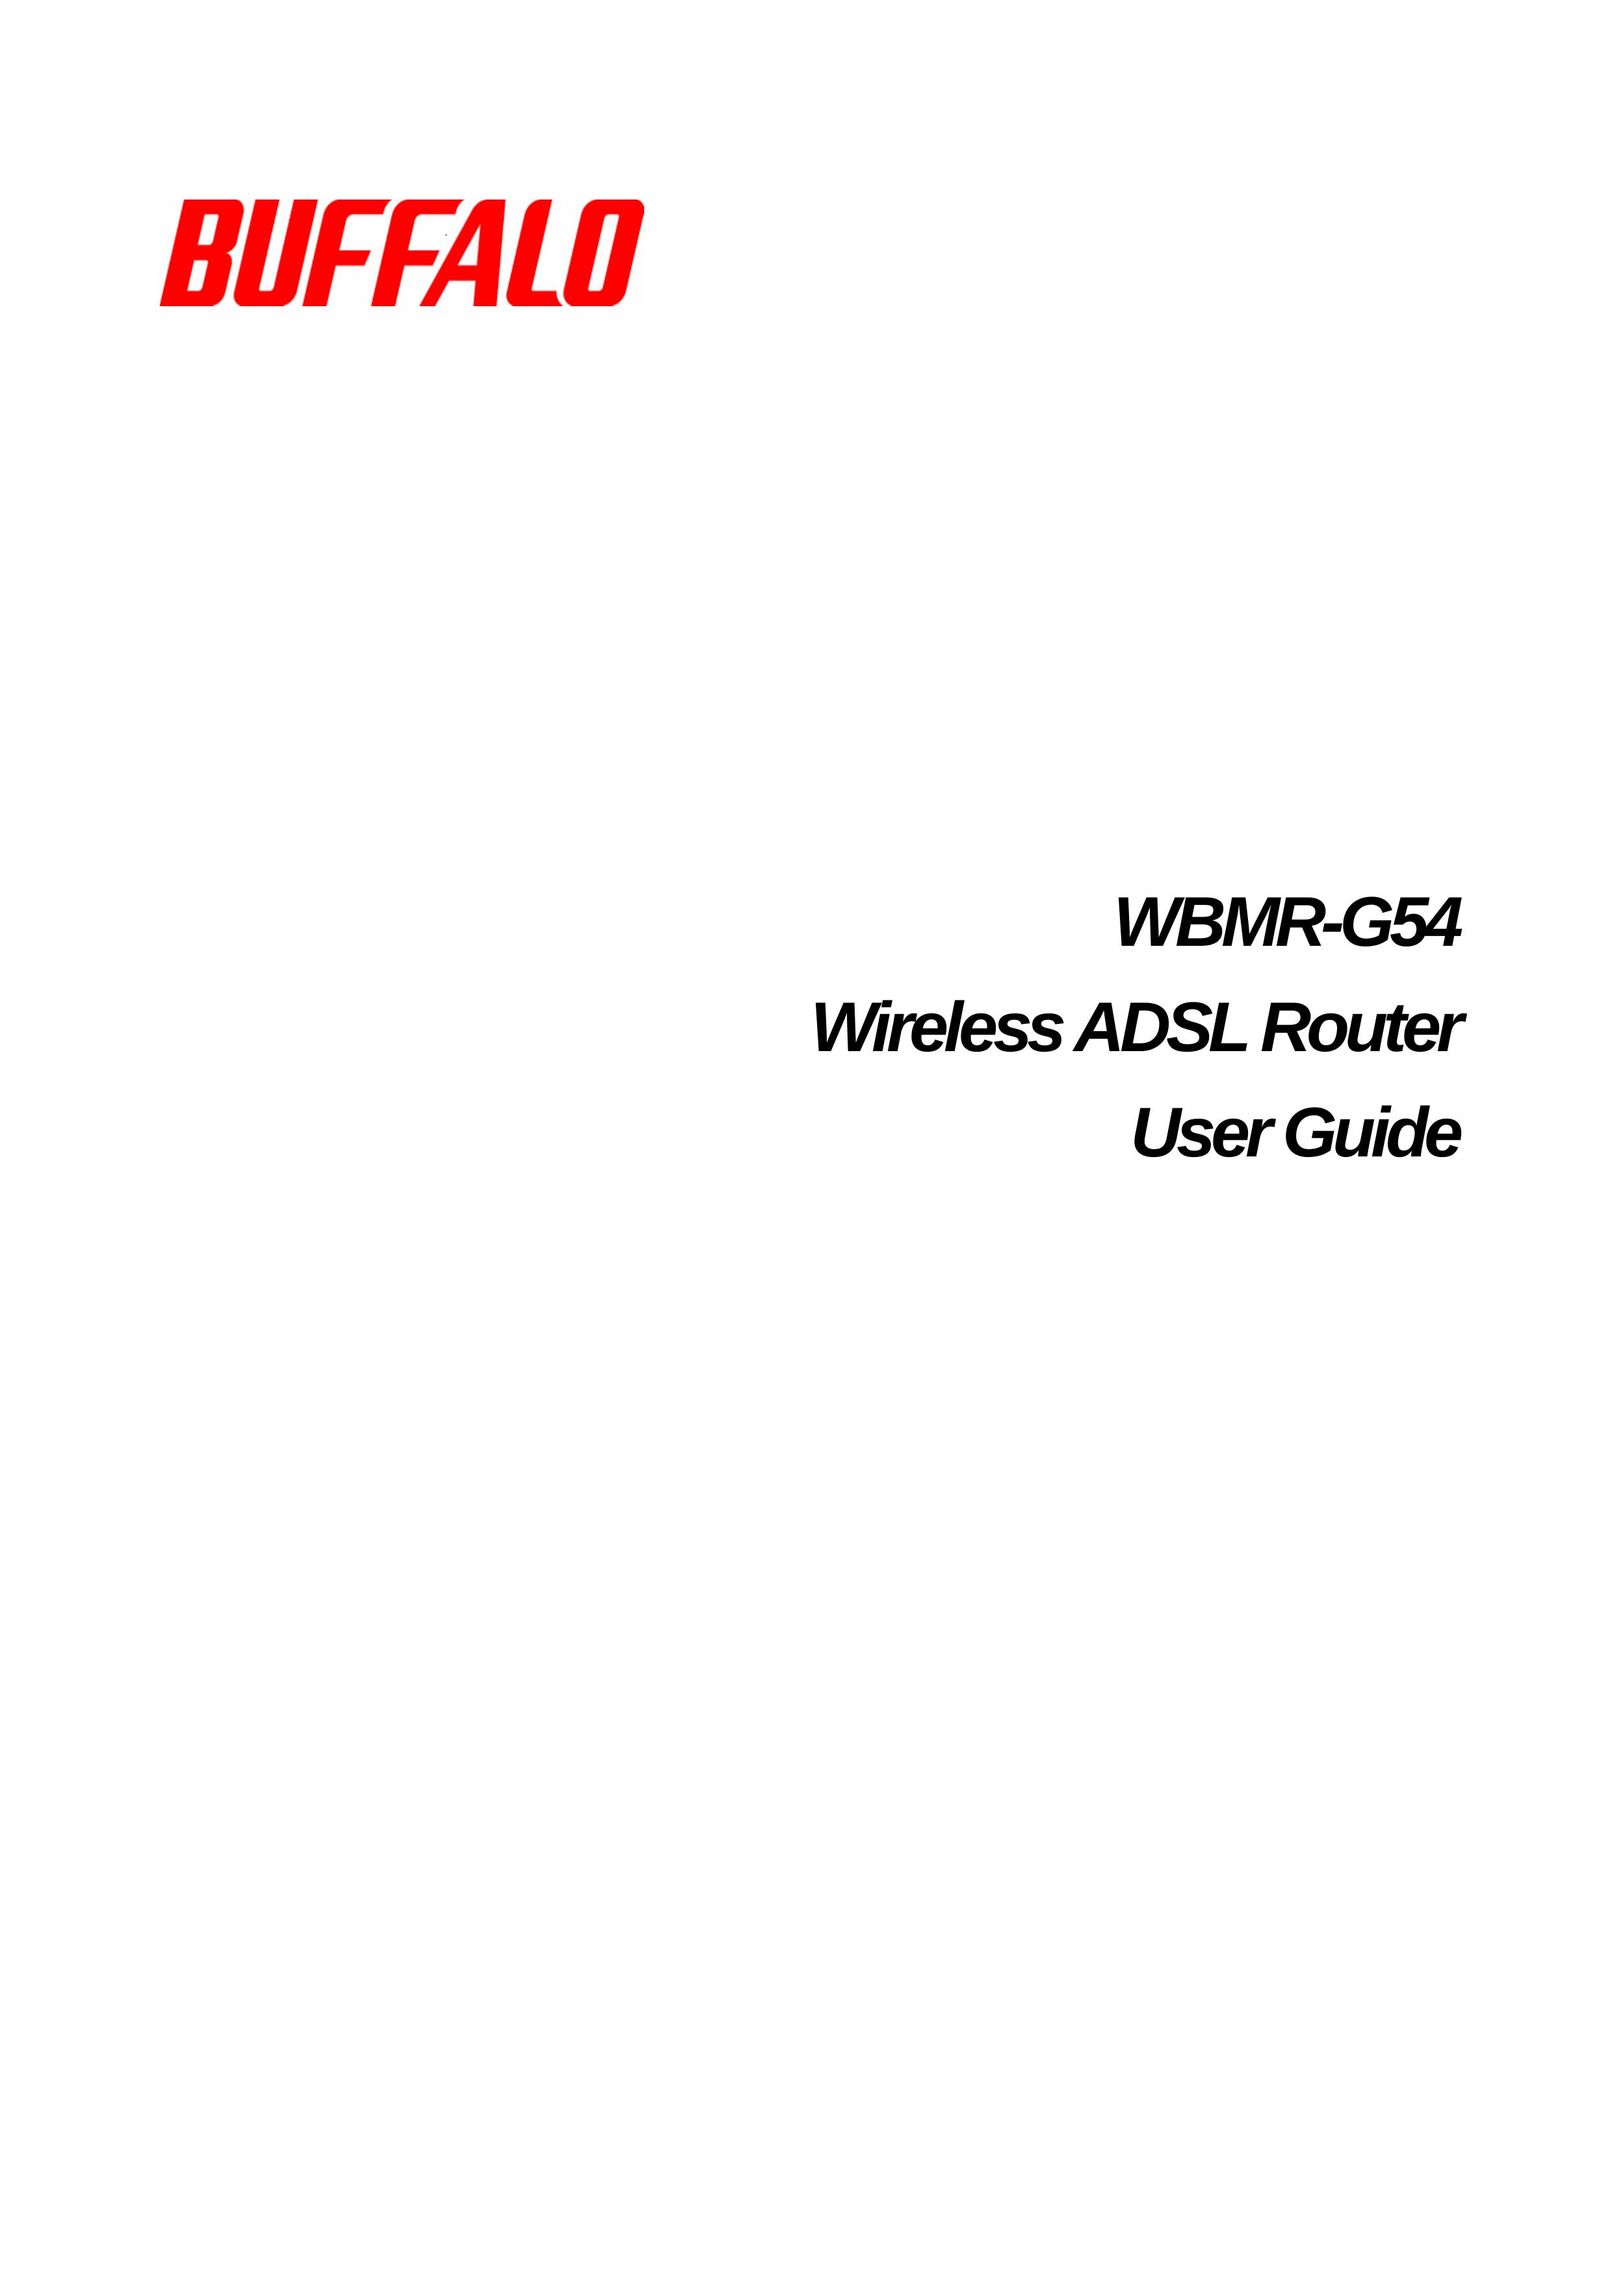 Buffalo Technology WBMR-G54 Network Router User Manual